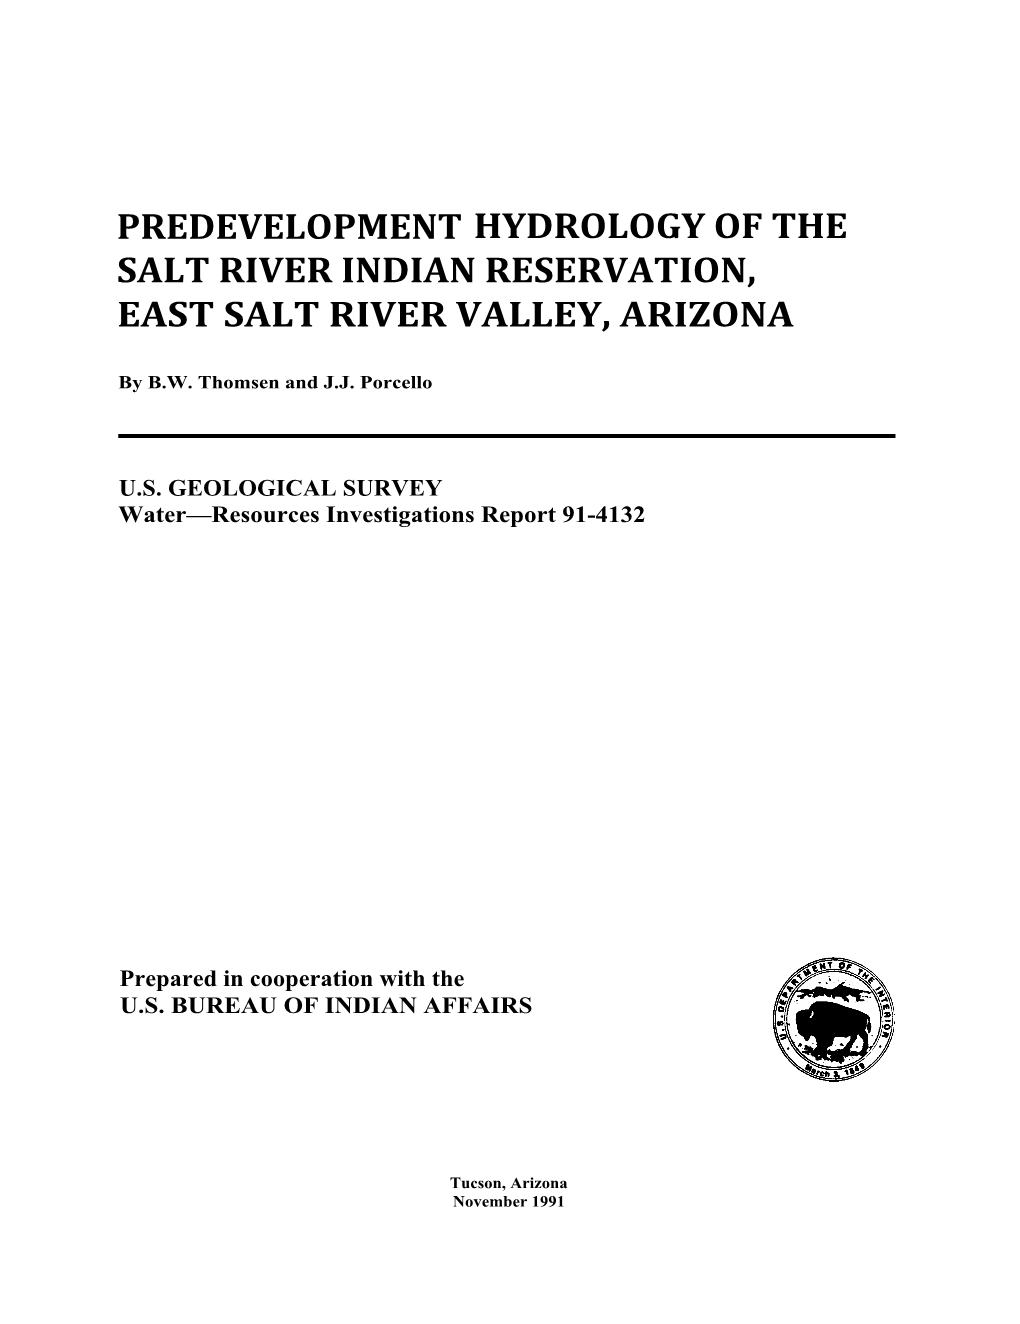 Predevelopment Hydrology of the Salt River Indian Reservation, East Salt River Valley, Arizona